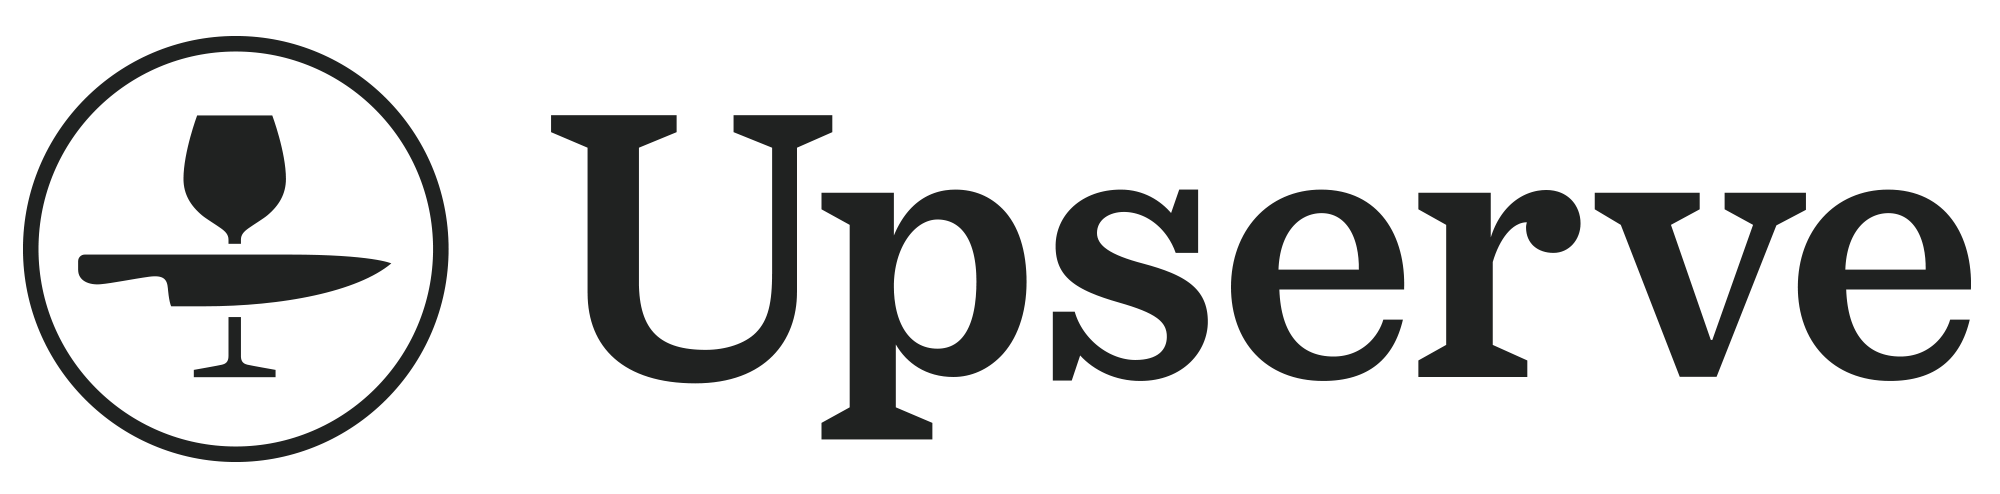 Upserve-Black-Logo-Lockup.png